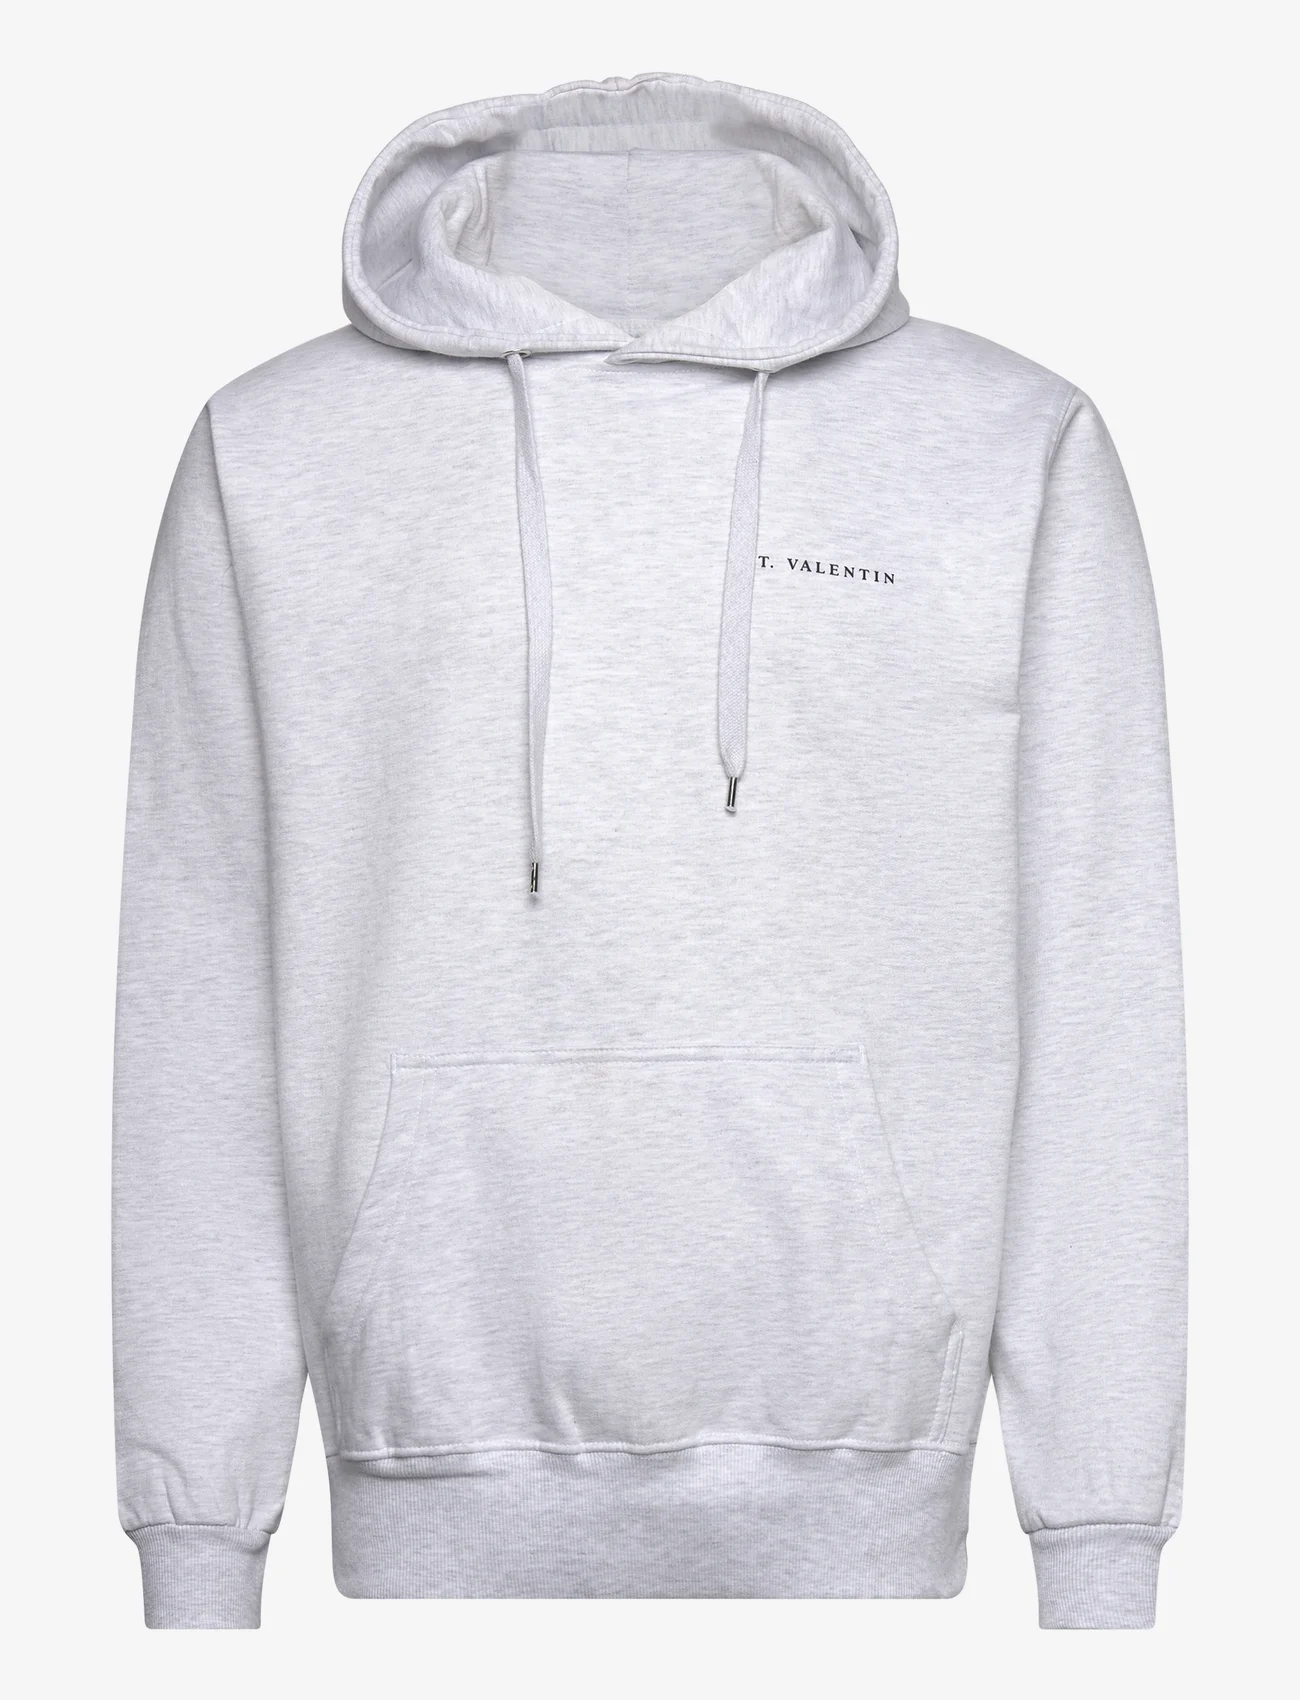 S.T. VALENTIN - Heavyweight Organic Logo Hoodie - Ash - hoodies - grey melange - 0